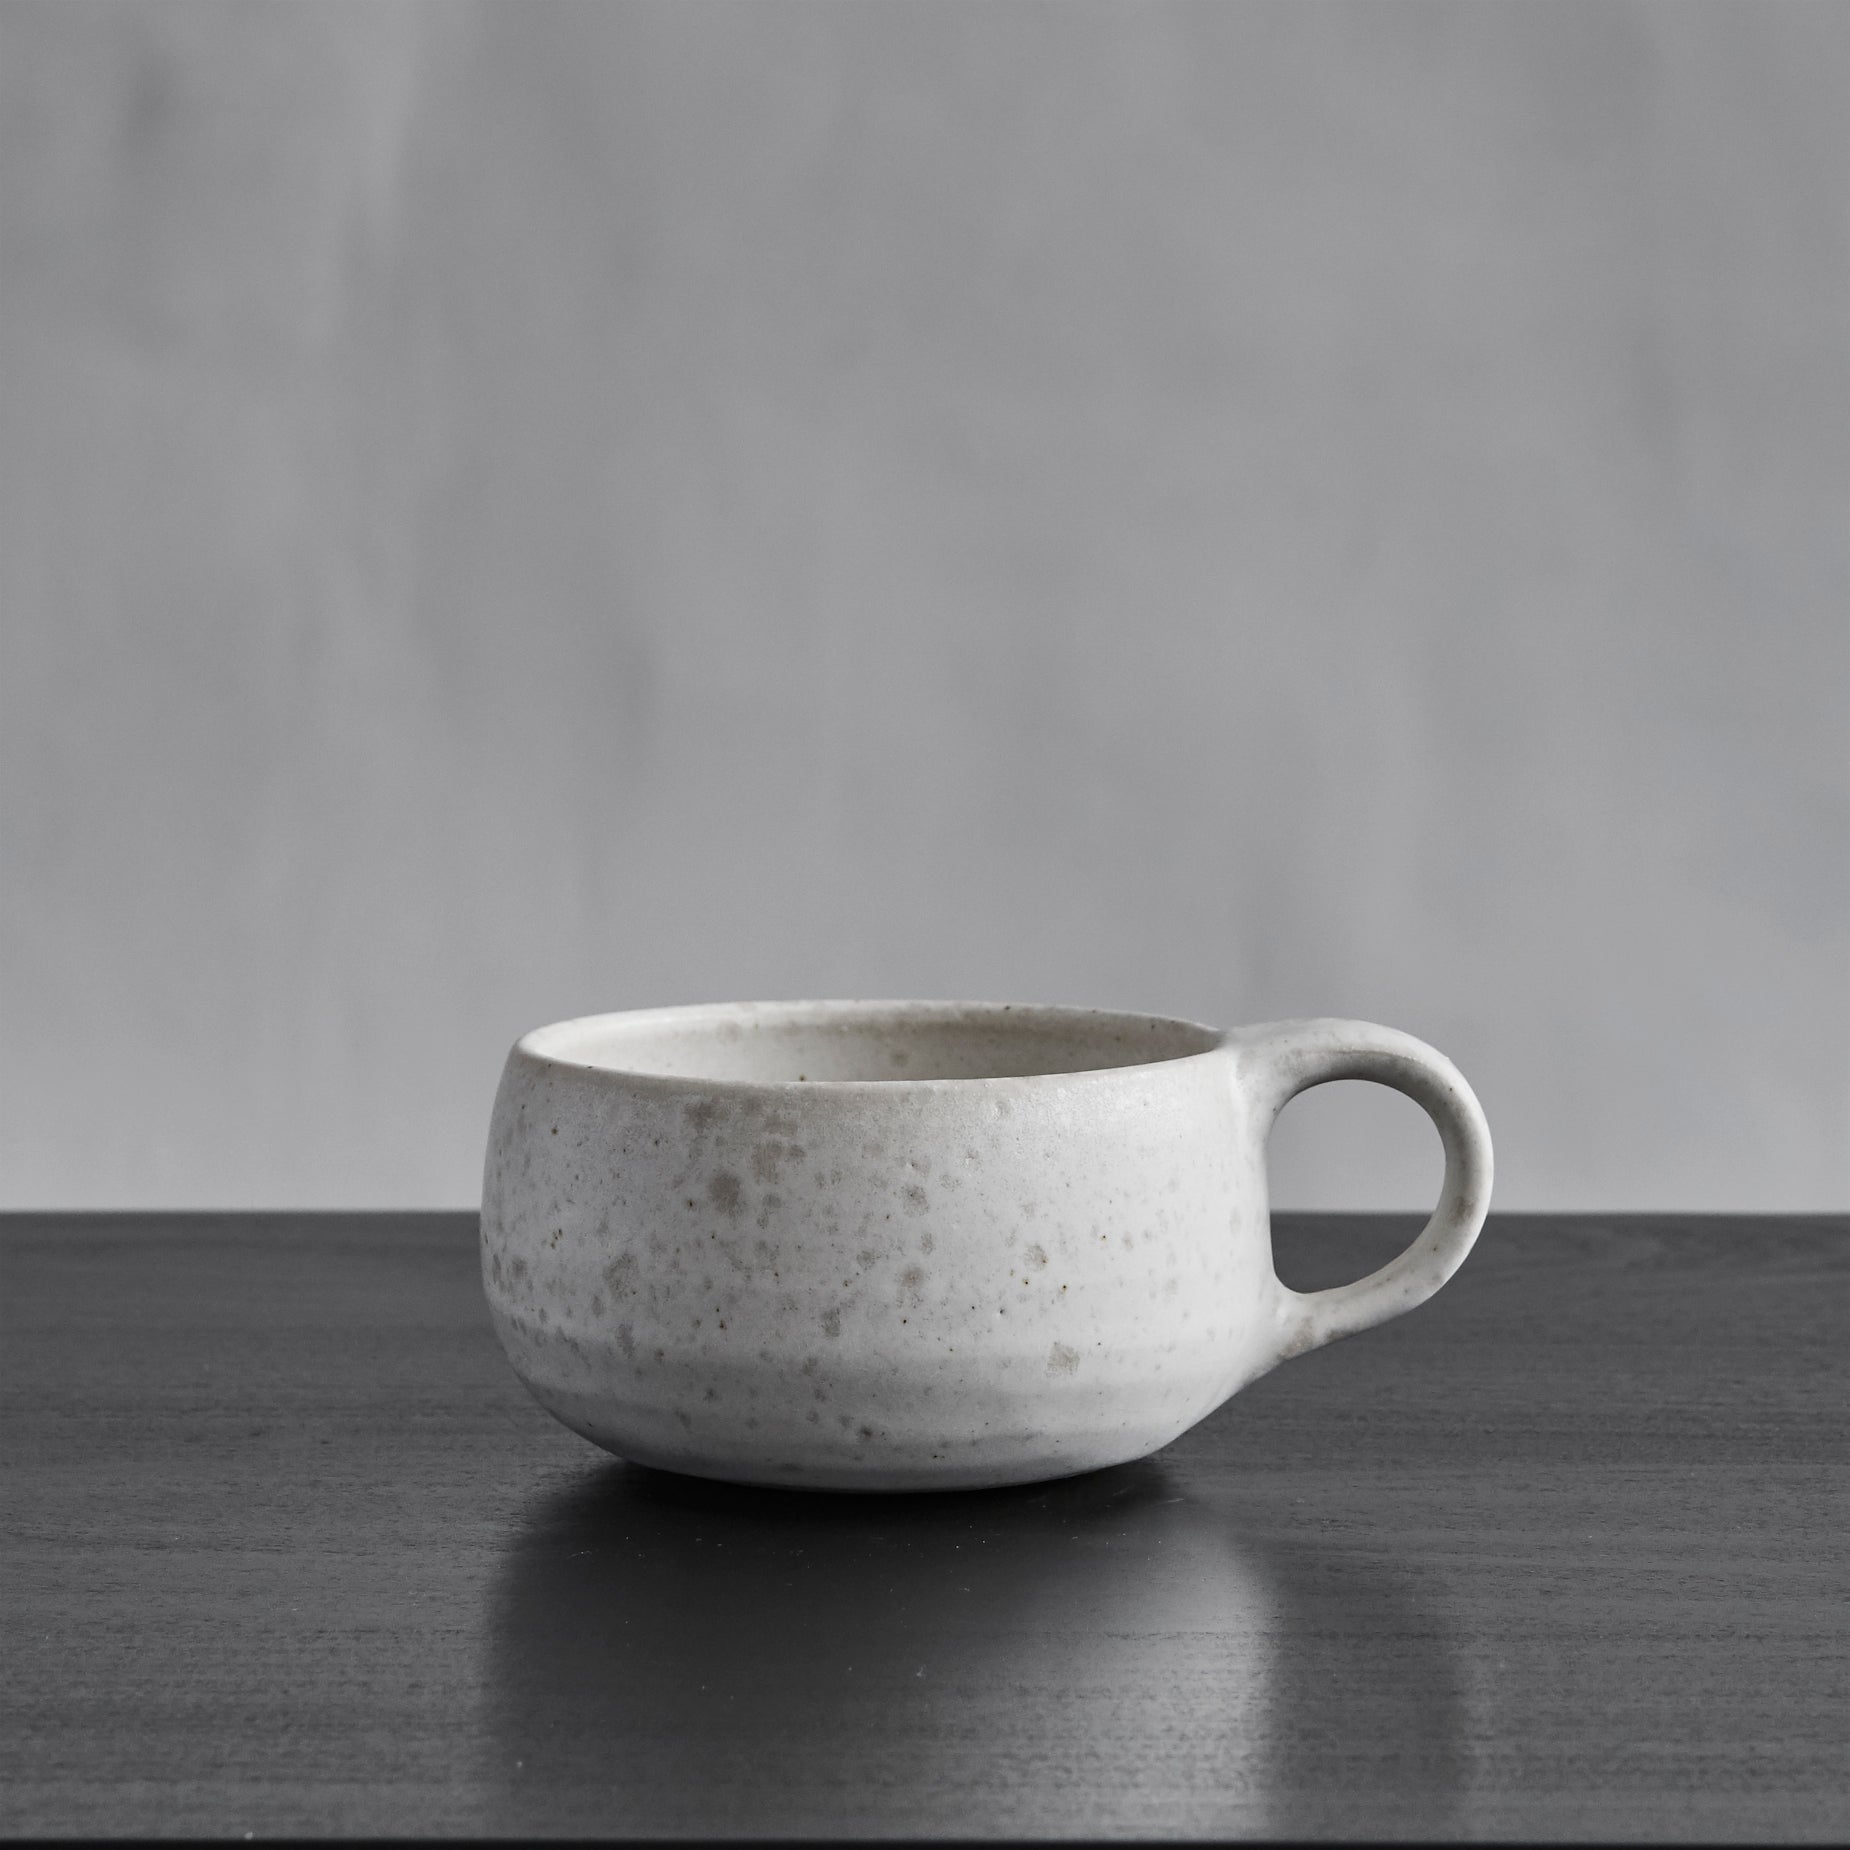 Coffee & Tea Sets: Mugs & Cups